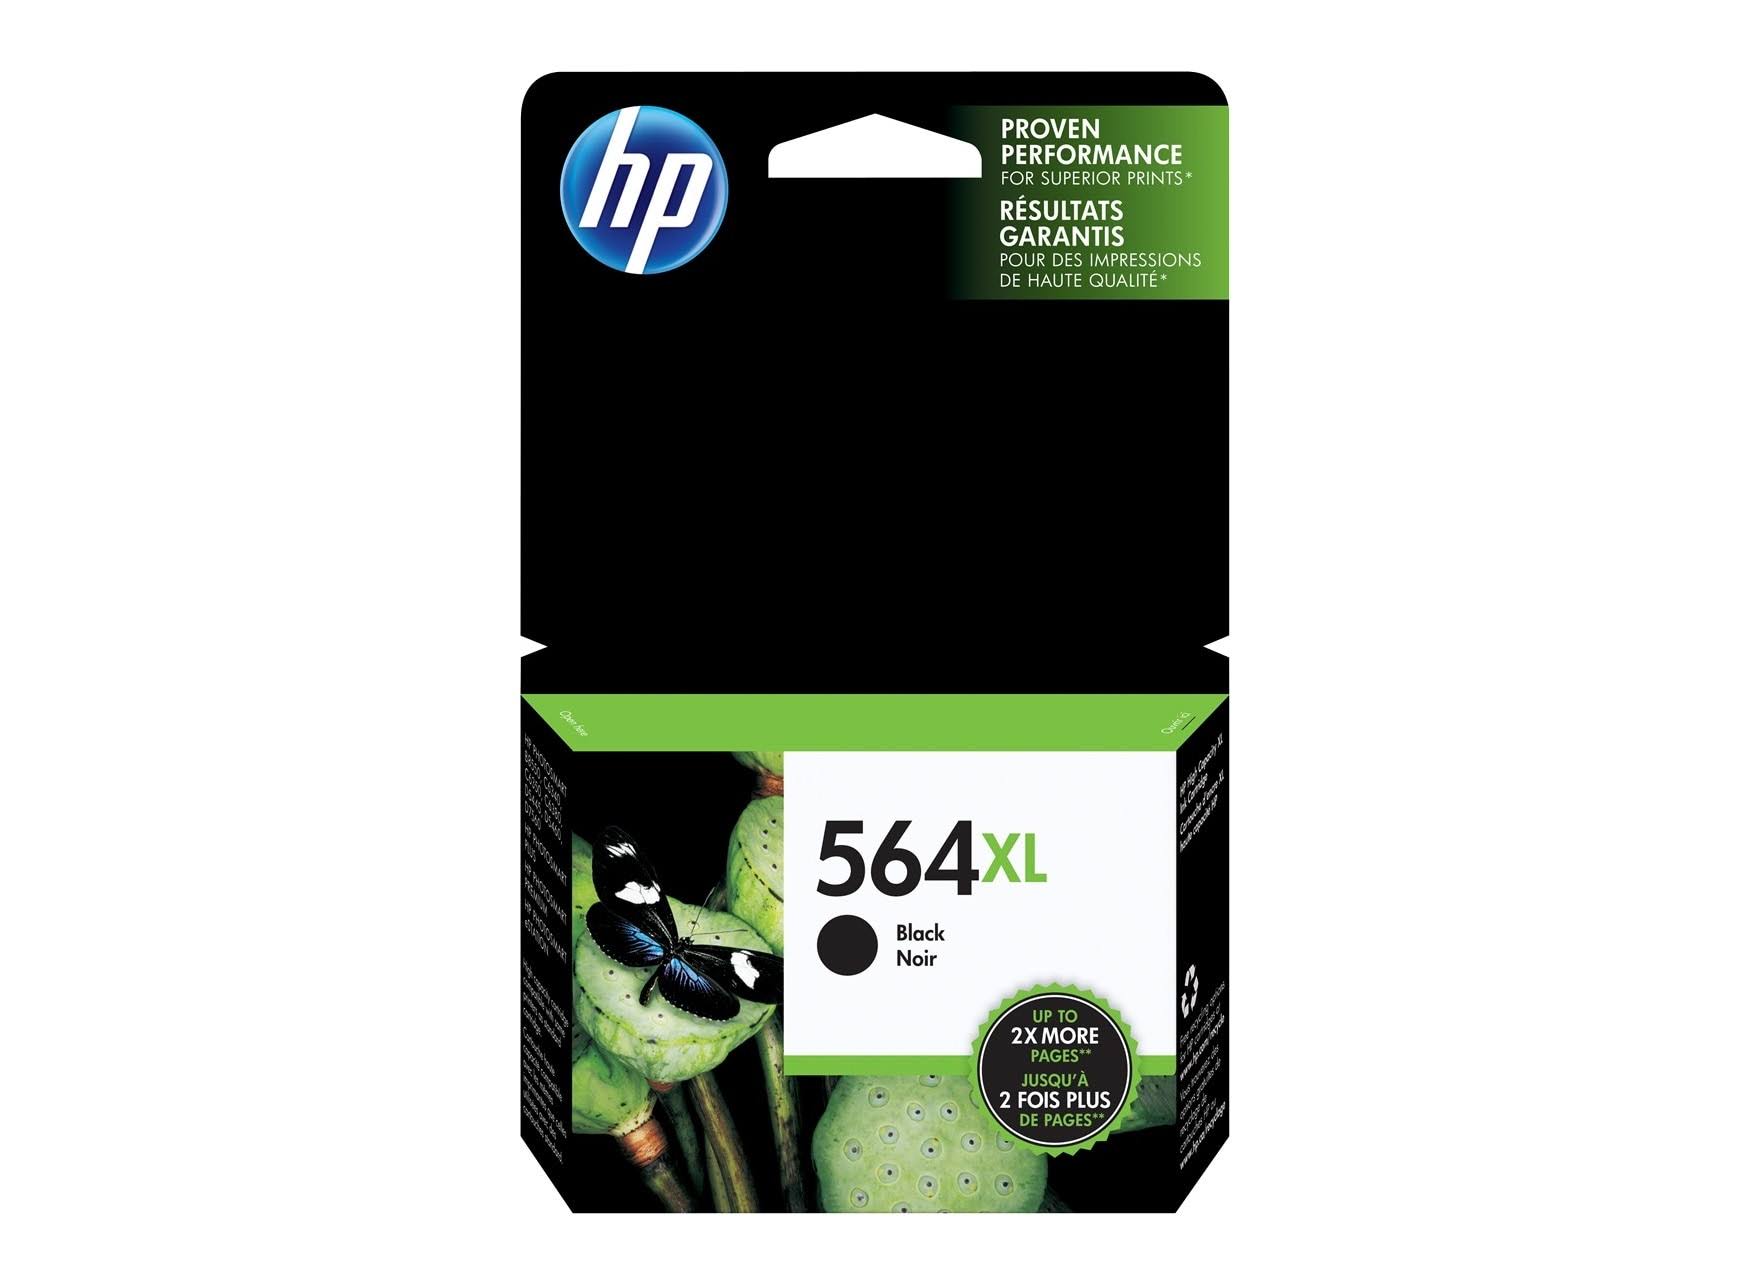 HP 564XL Ink Cartridge - Black Noir